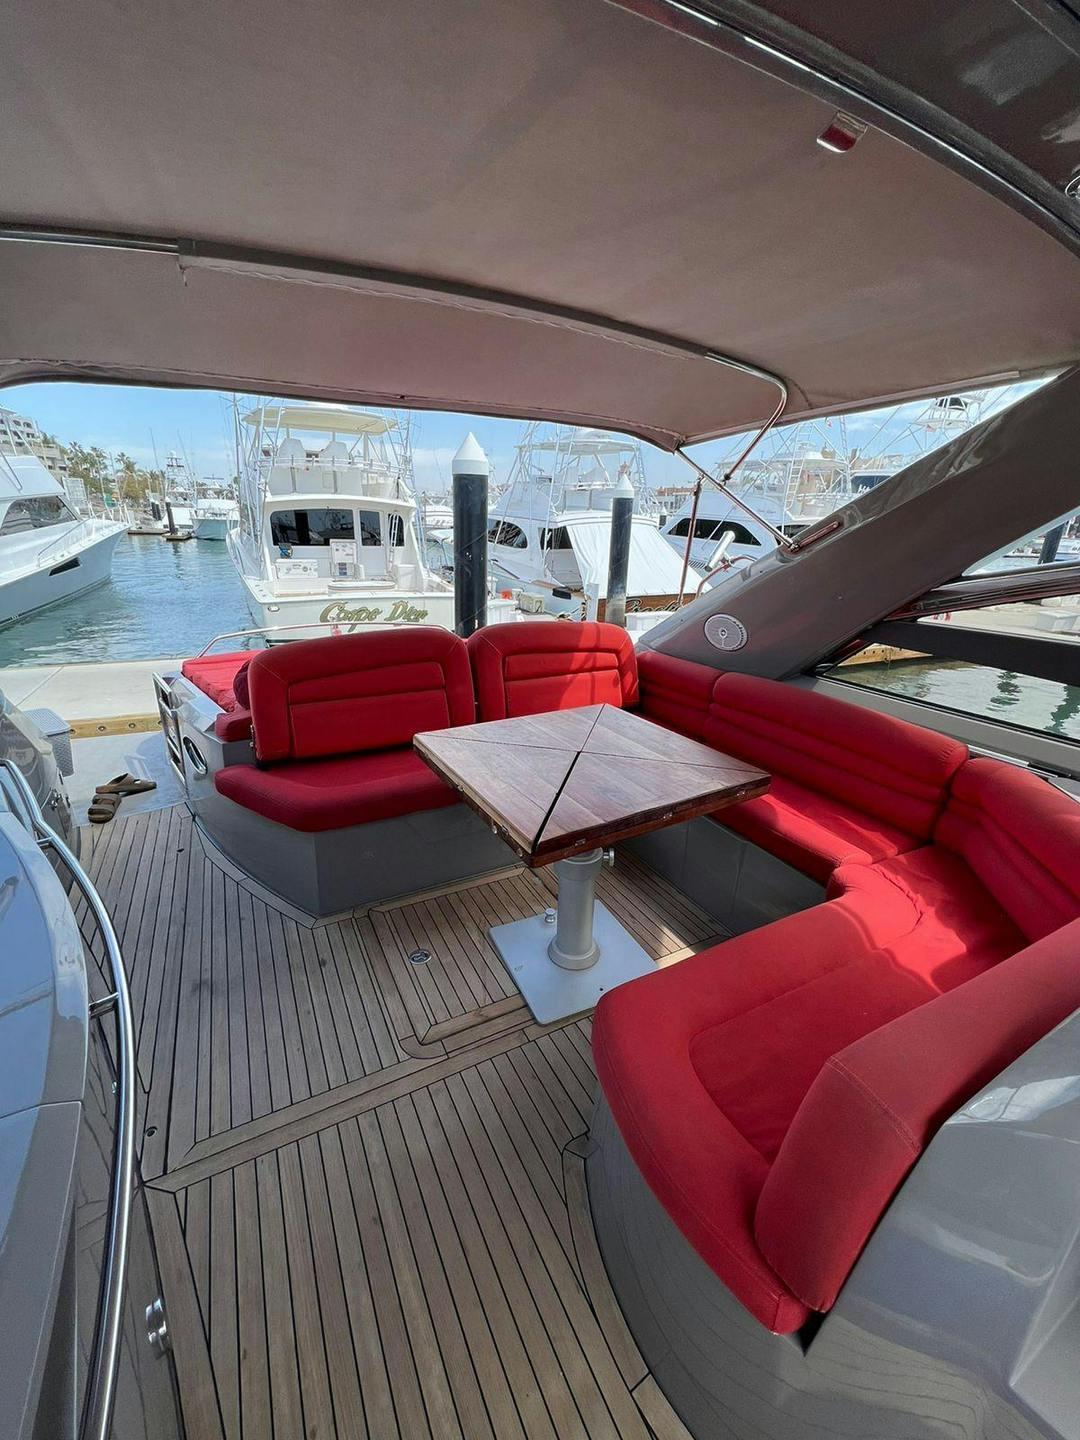 55' Sunseeker luxury charter yacht - Cabo San Lucas, BCS, Mexico - 3